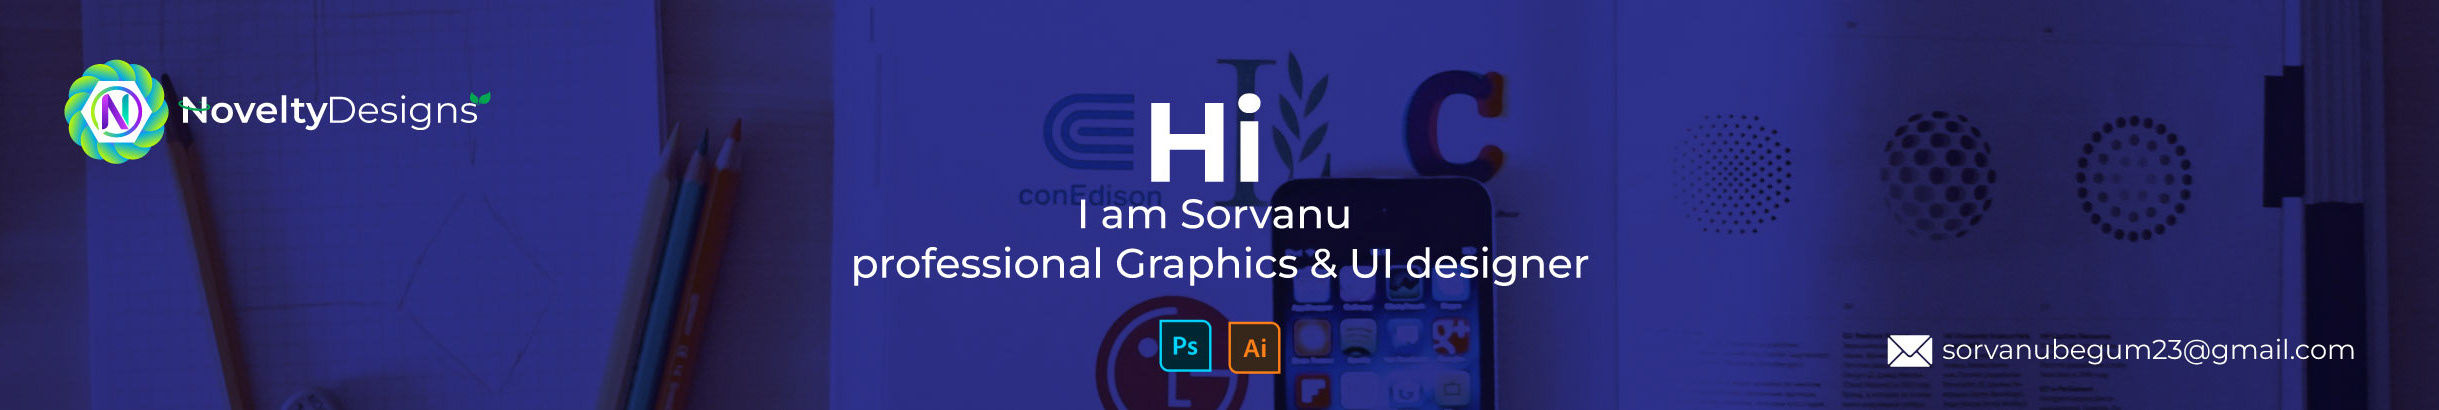 Msb Sorvanu's profile banner